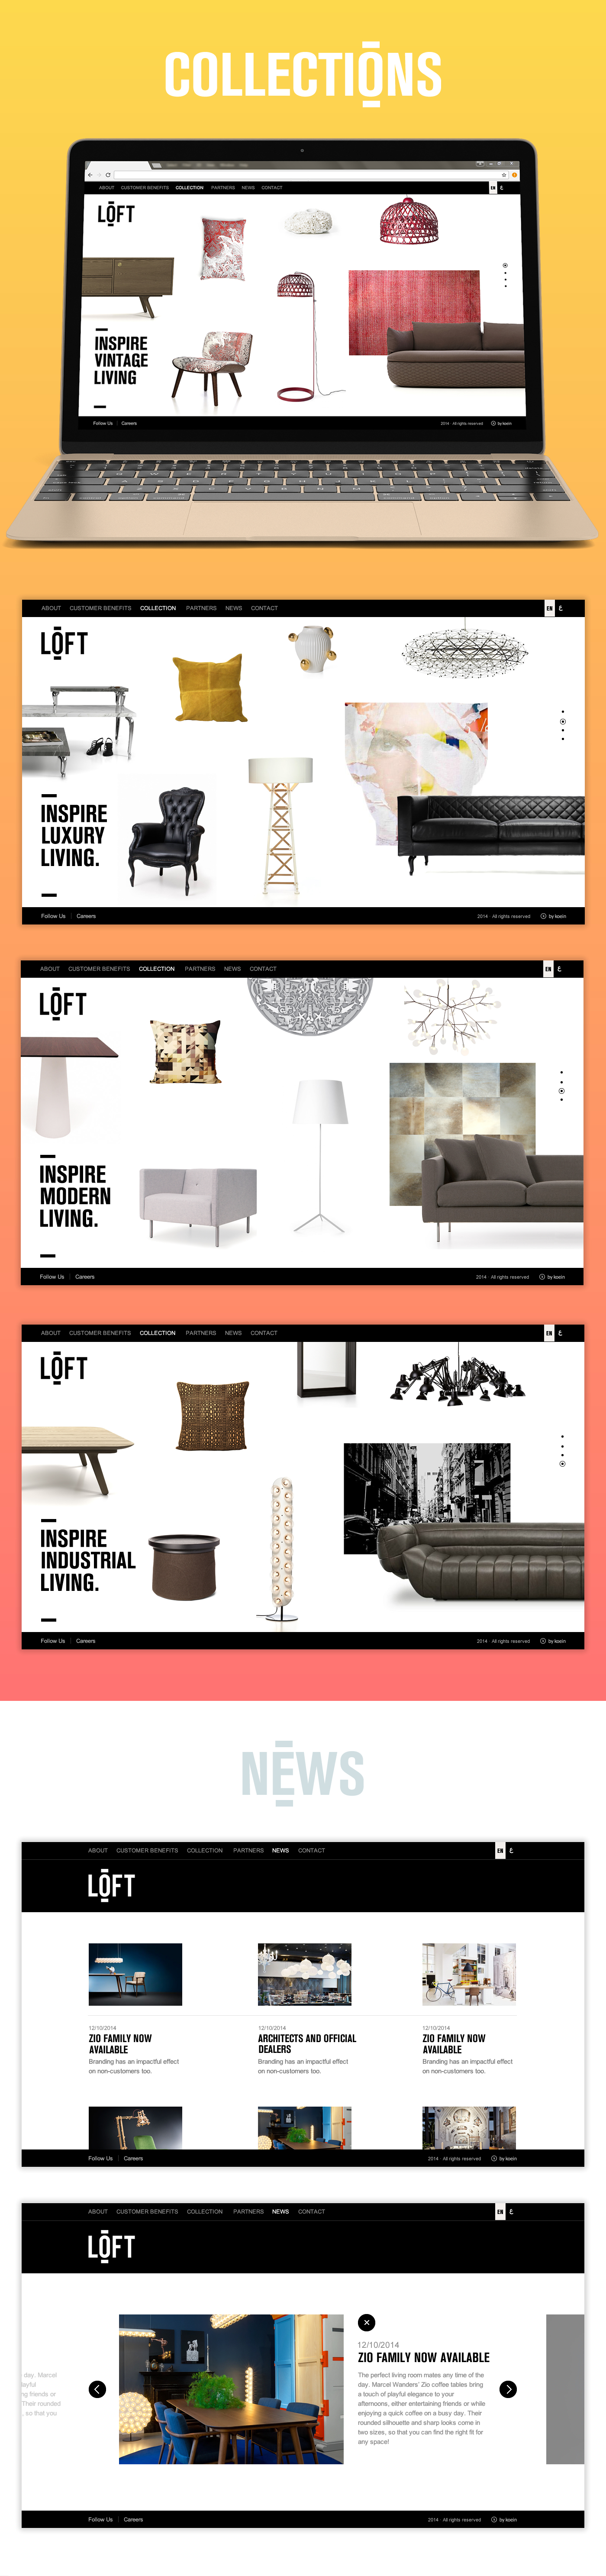 LOFT furniture jeddah Website Webdesign Interface gallery Experience design showroom